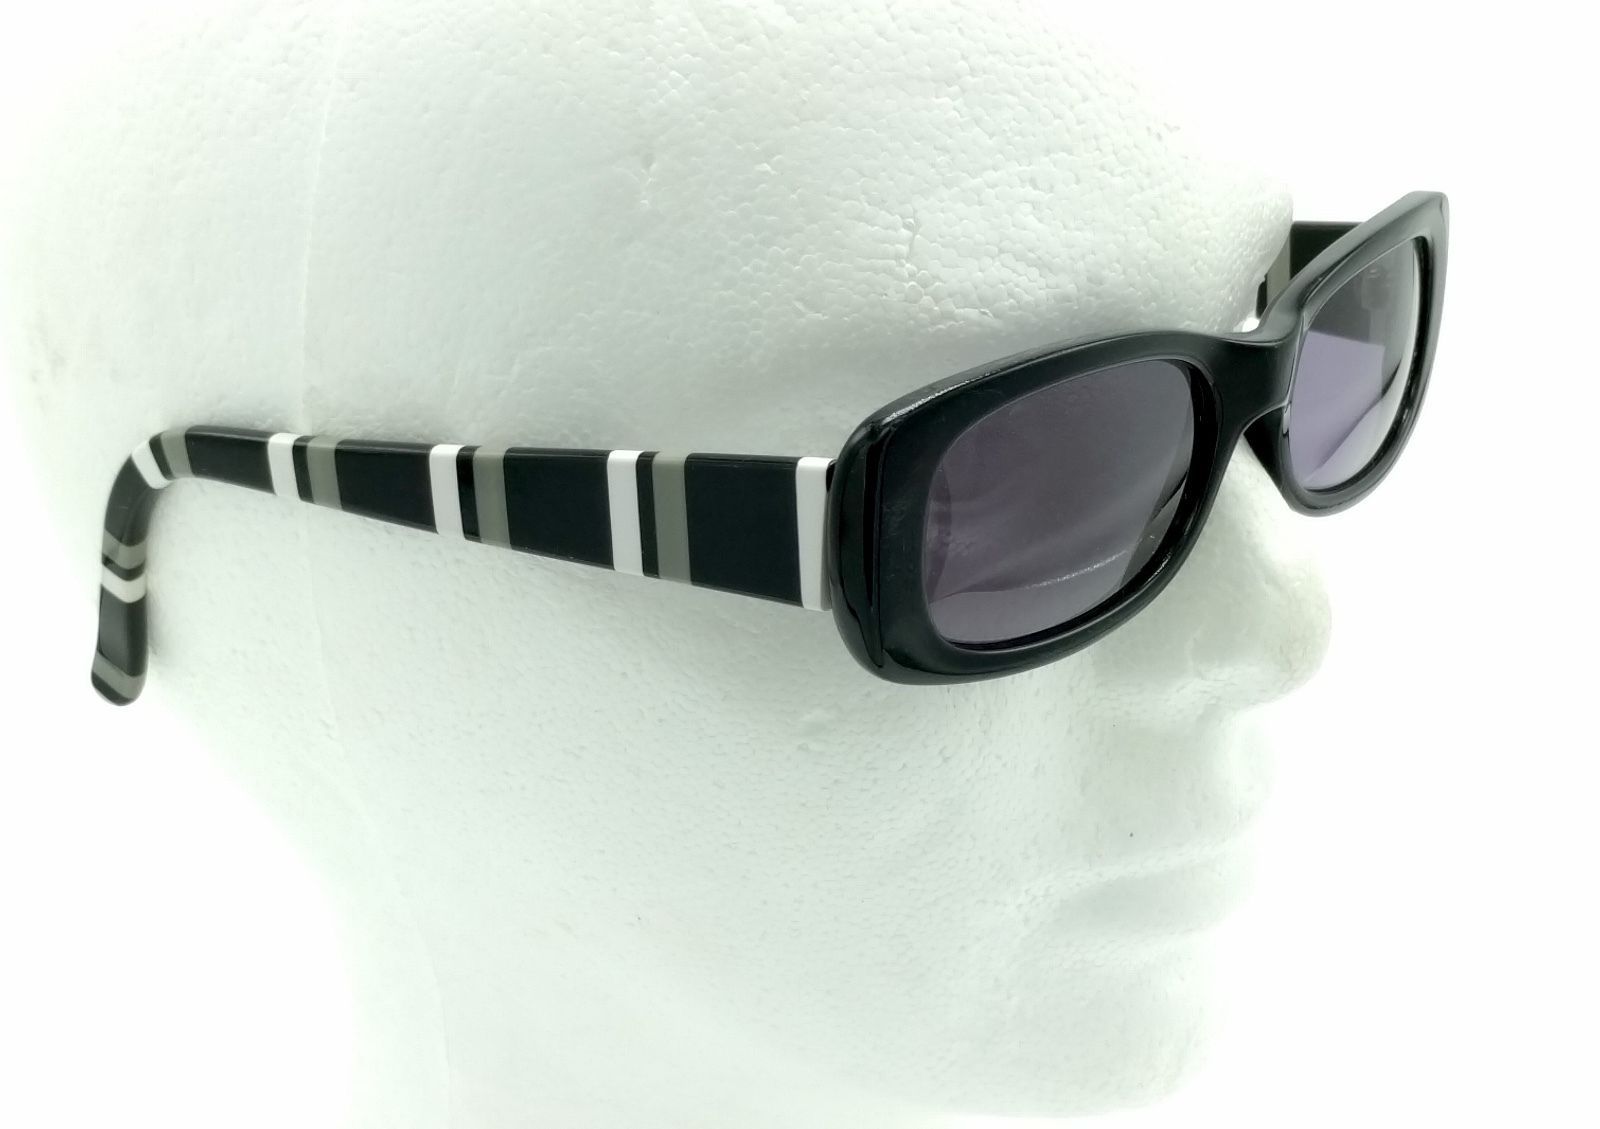 OOH LA LA de Paris KAY C1 Sunglasses Frame Women Black White Stripes 49 18 140 - $55.00